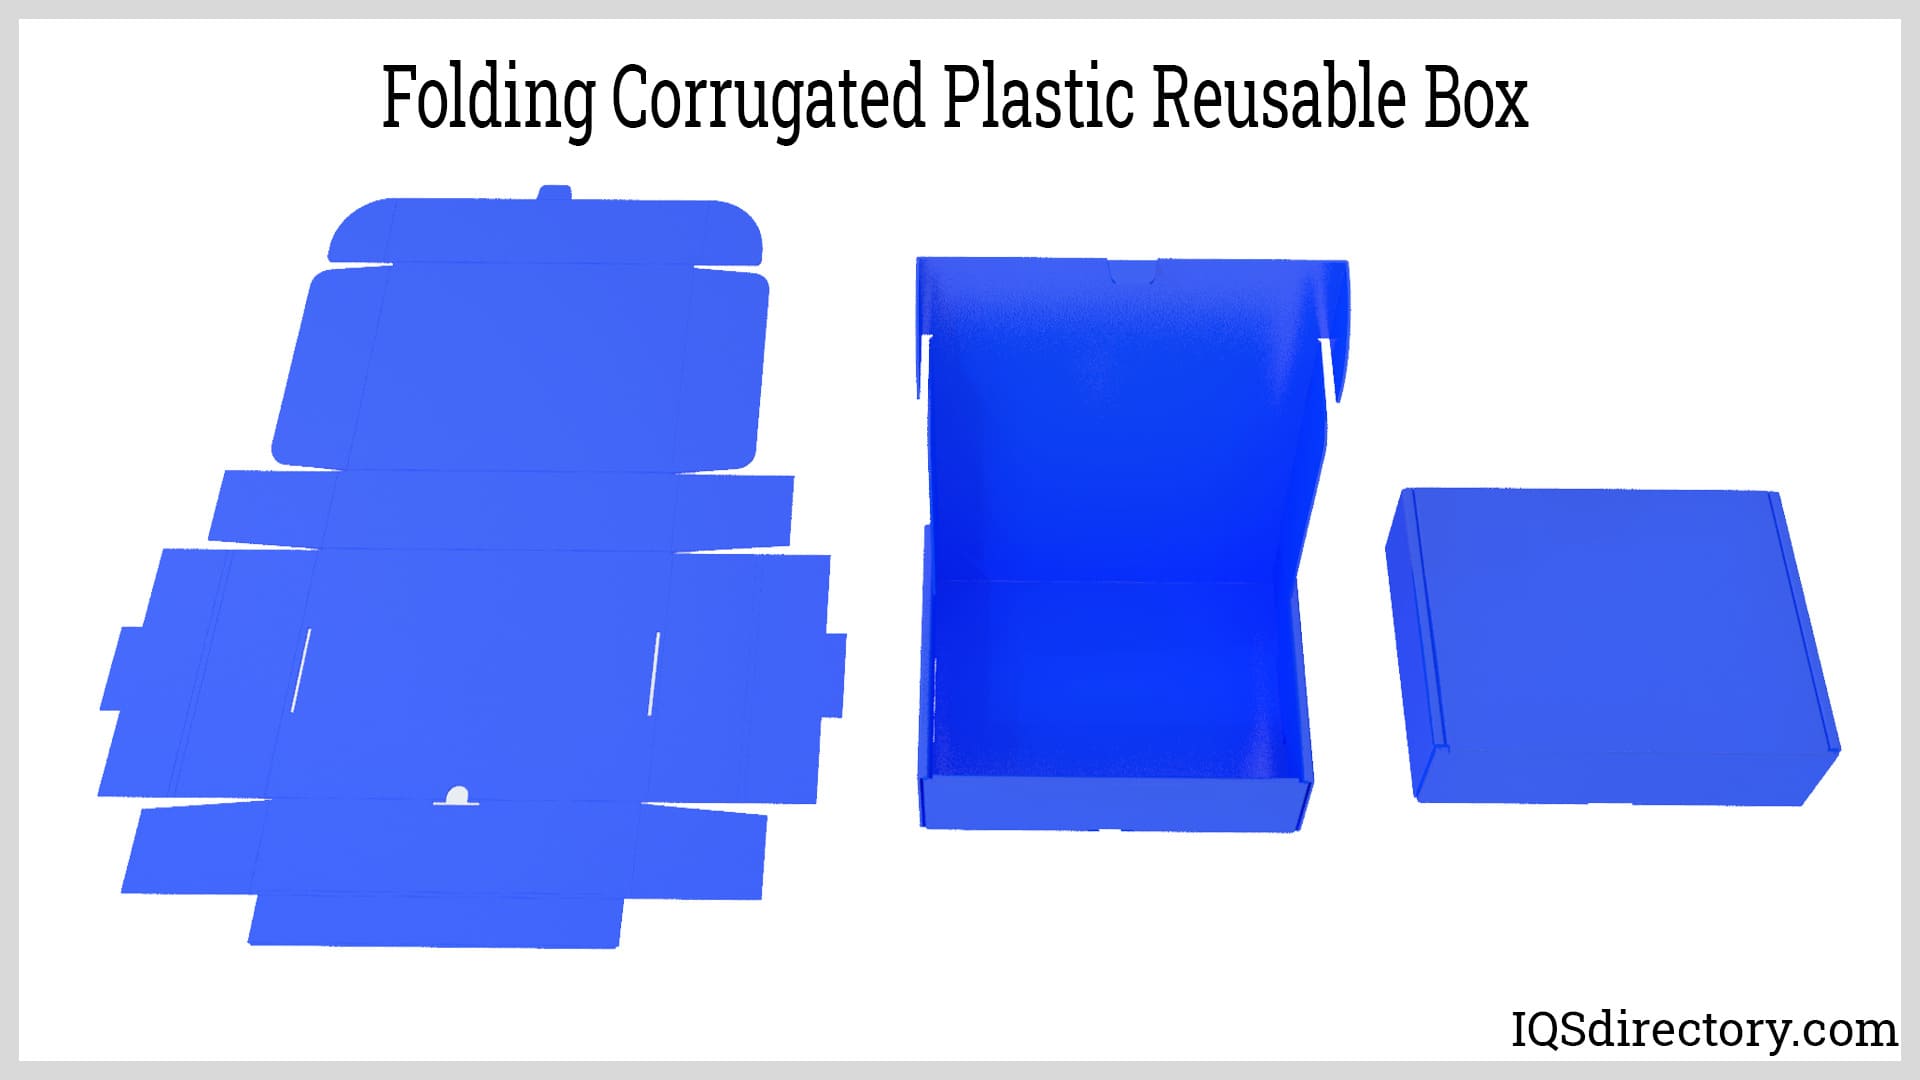 Folding Corrugated Plastic Reusable Box